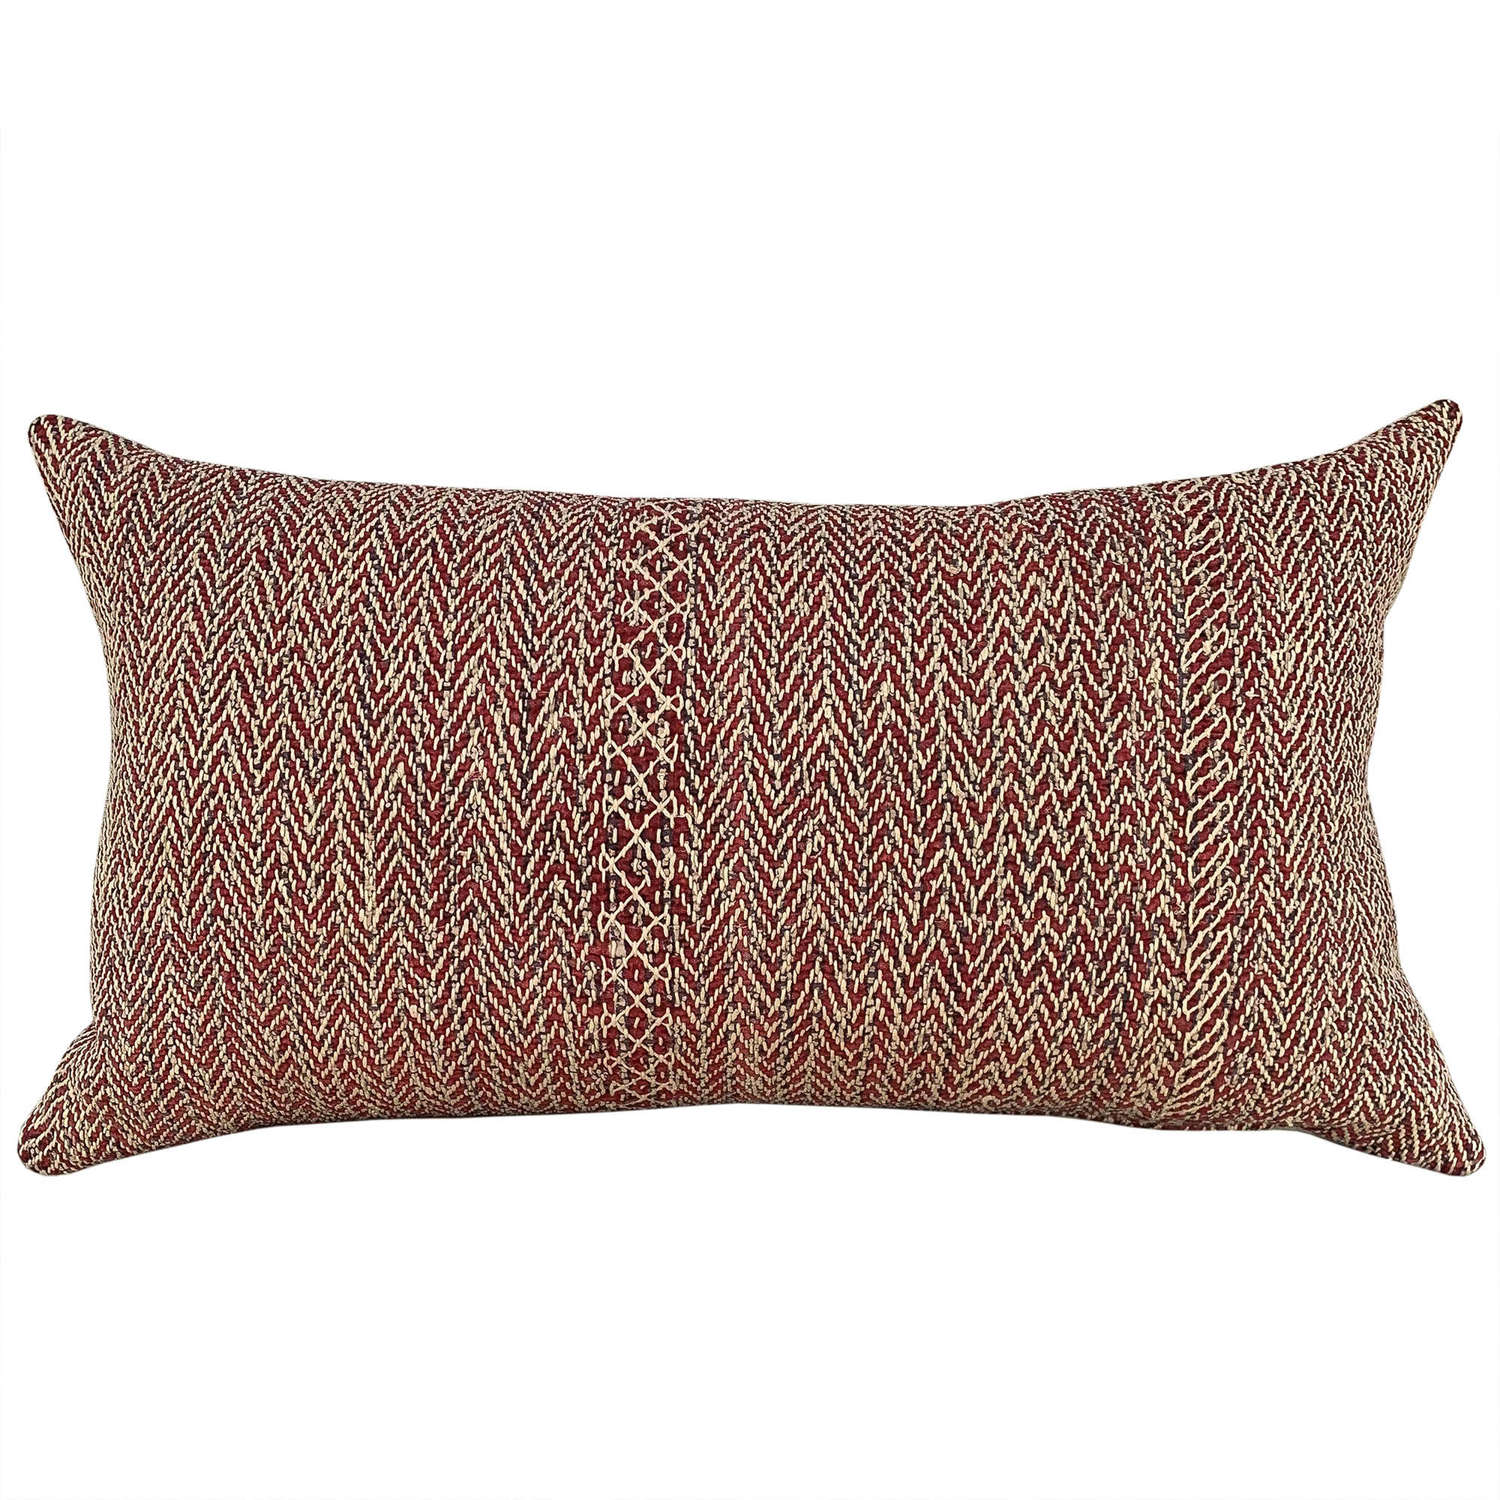 Red Banjara cushion